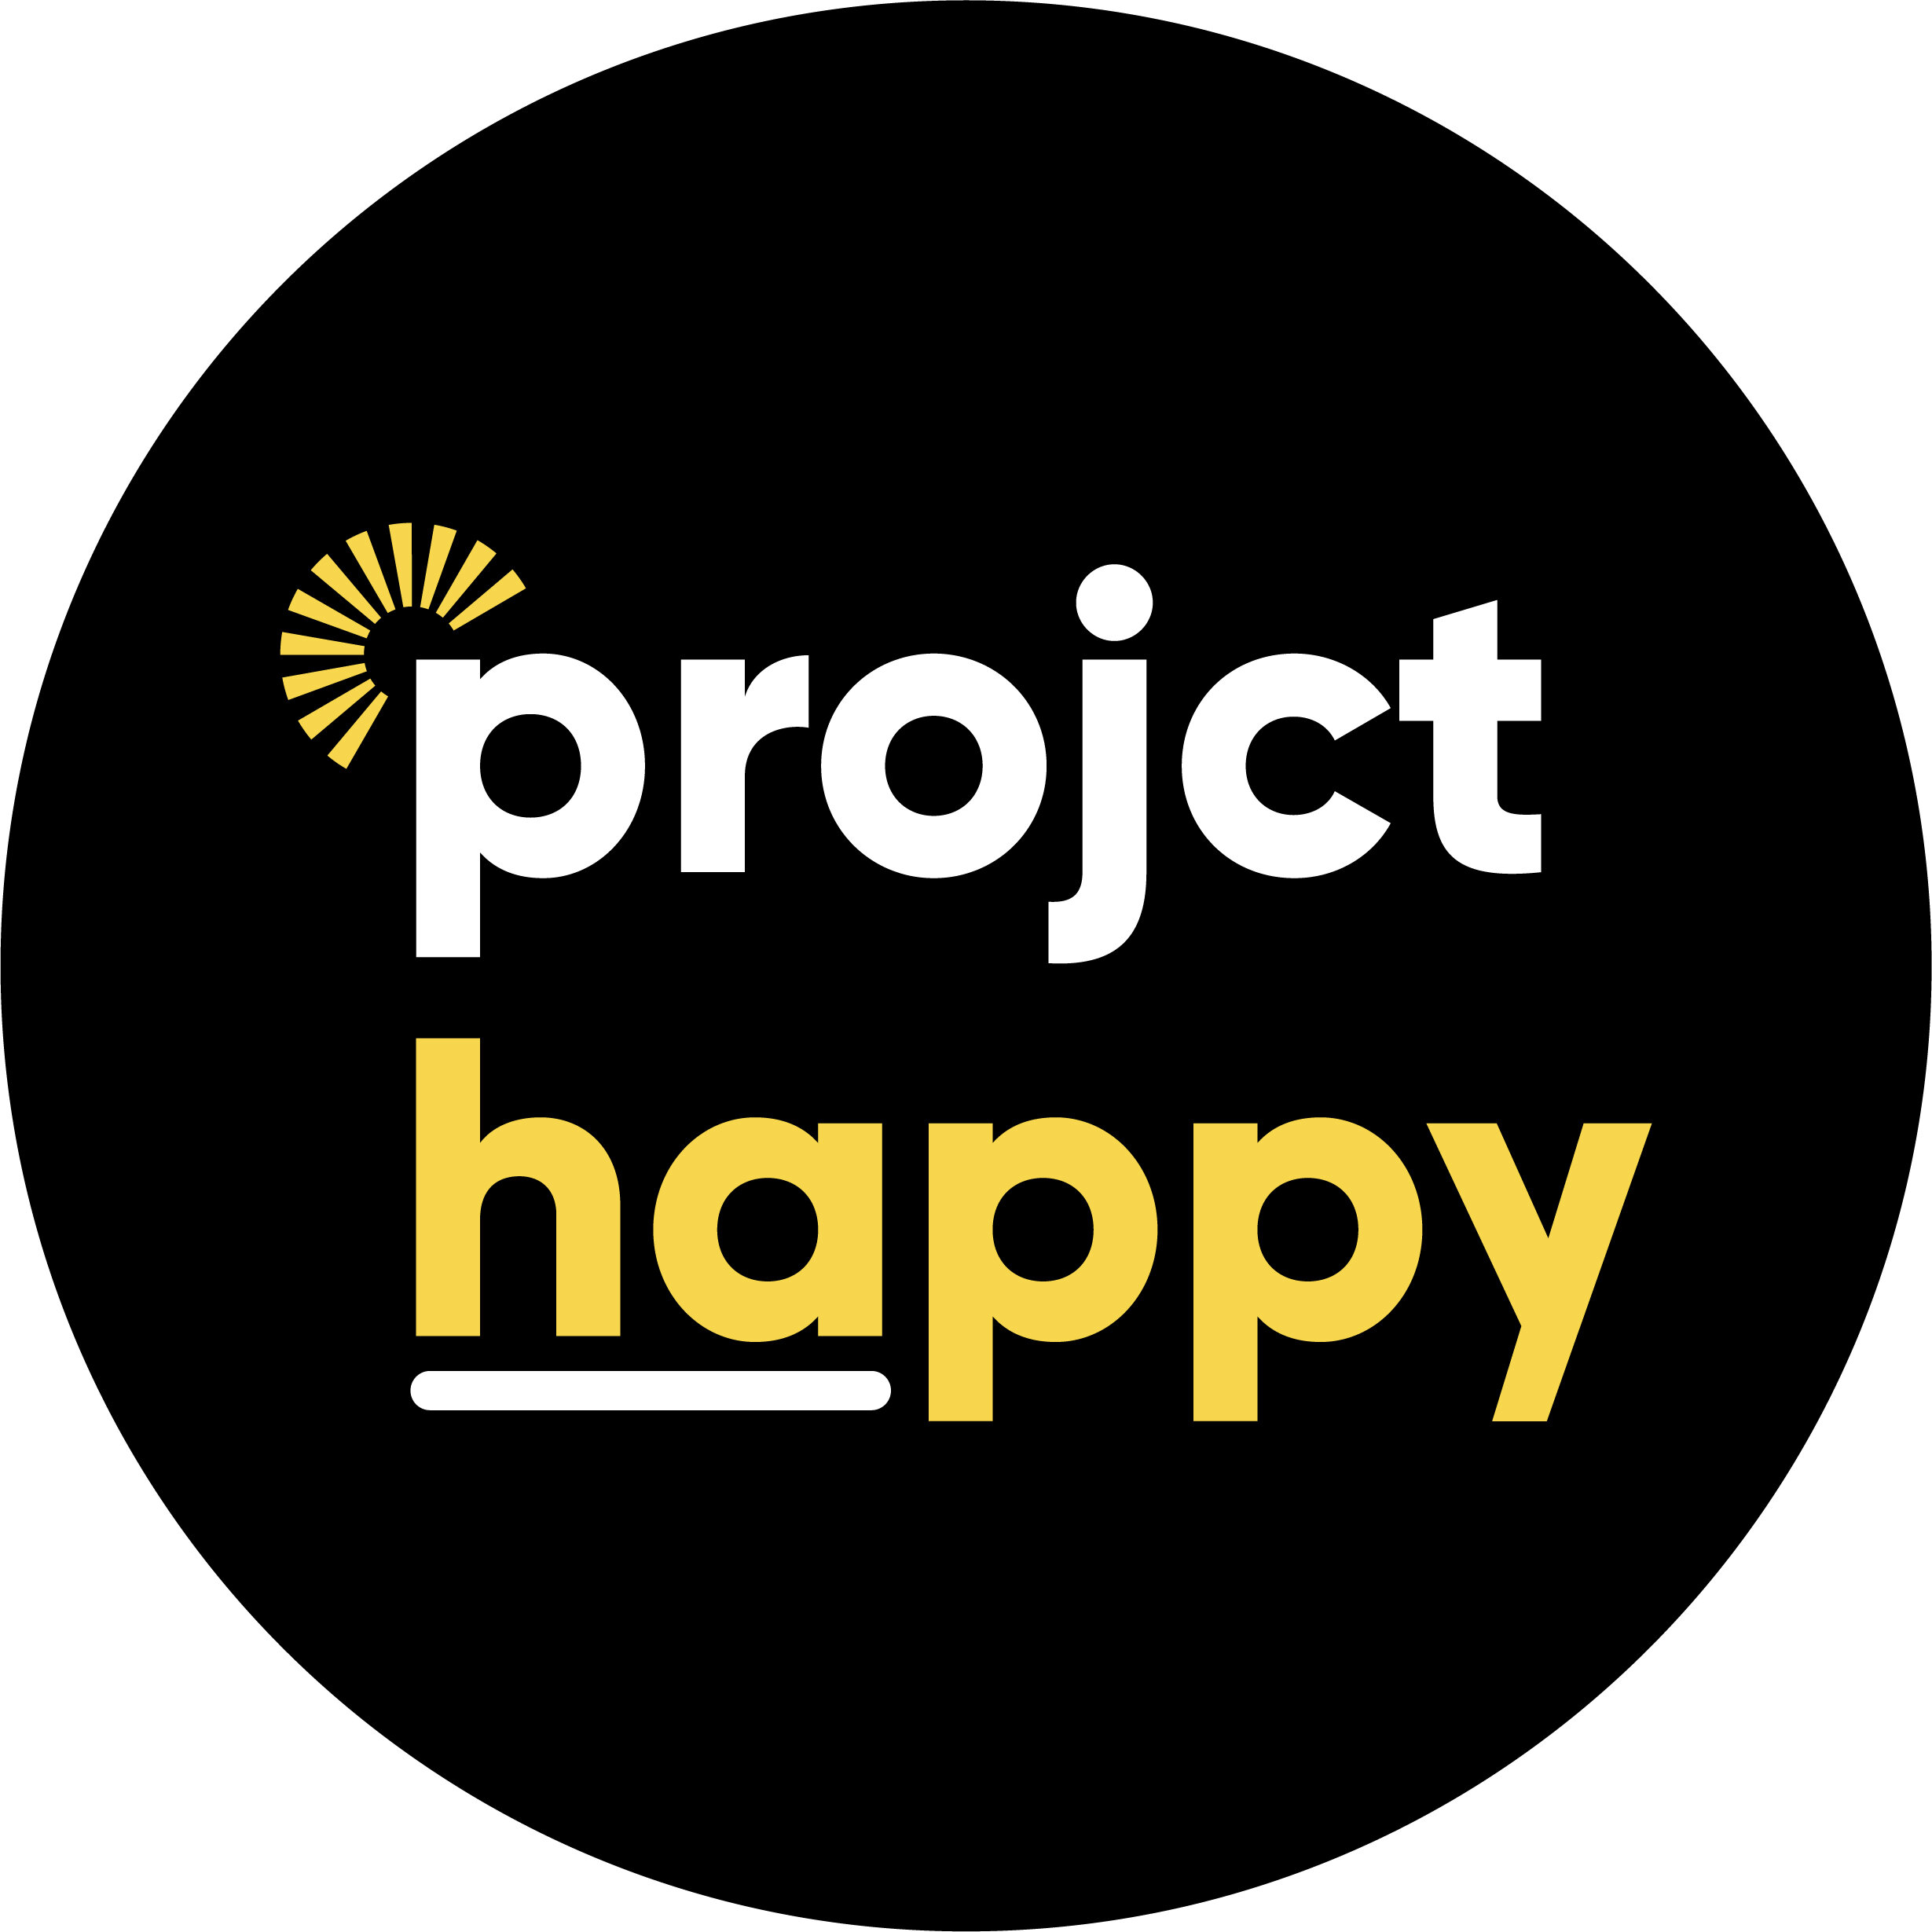 Projct Happy Logo Black Background.jpg